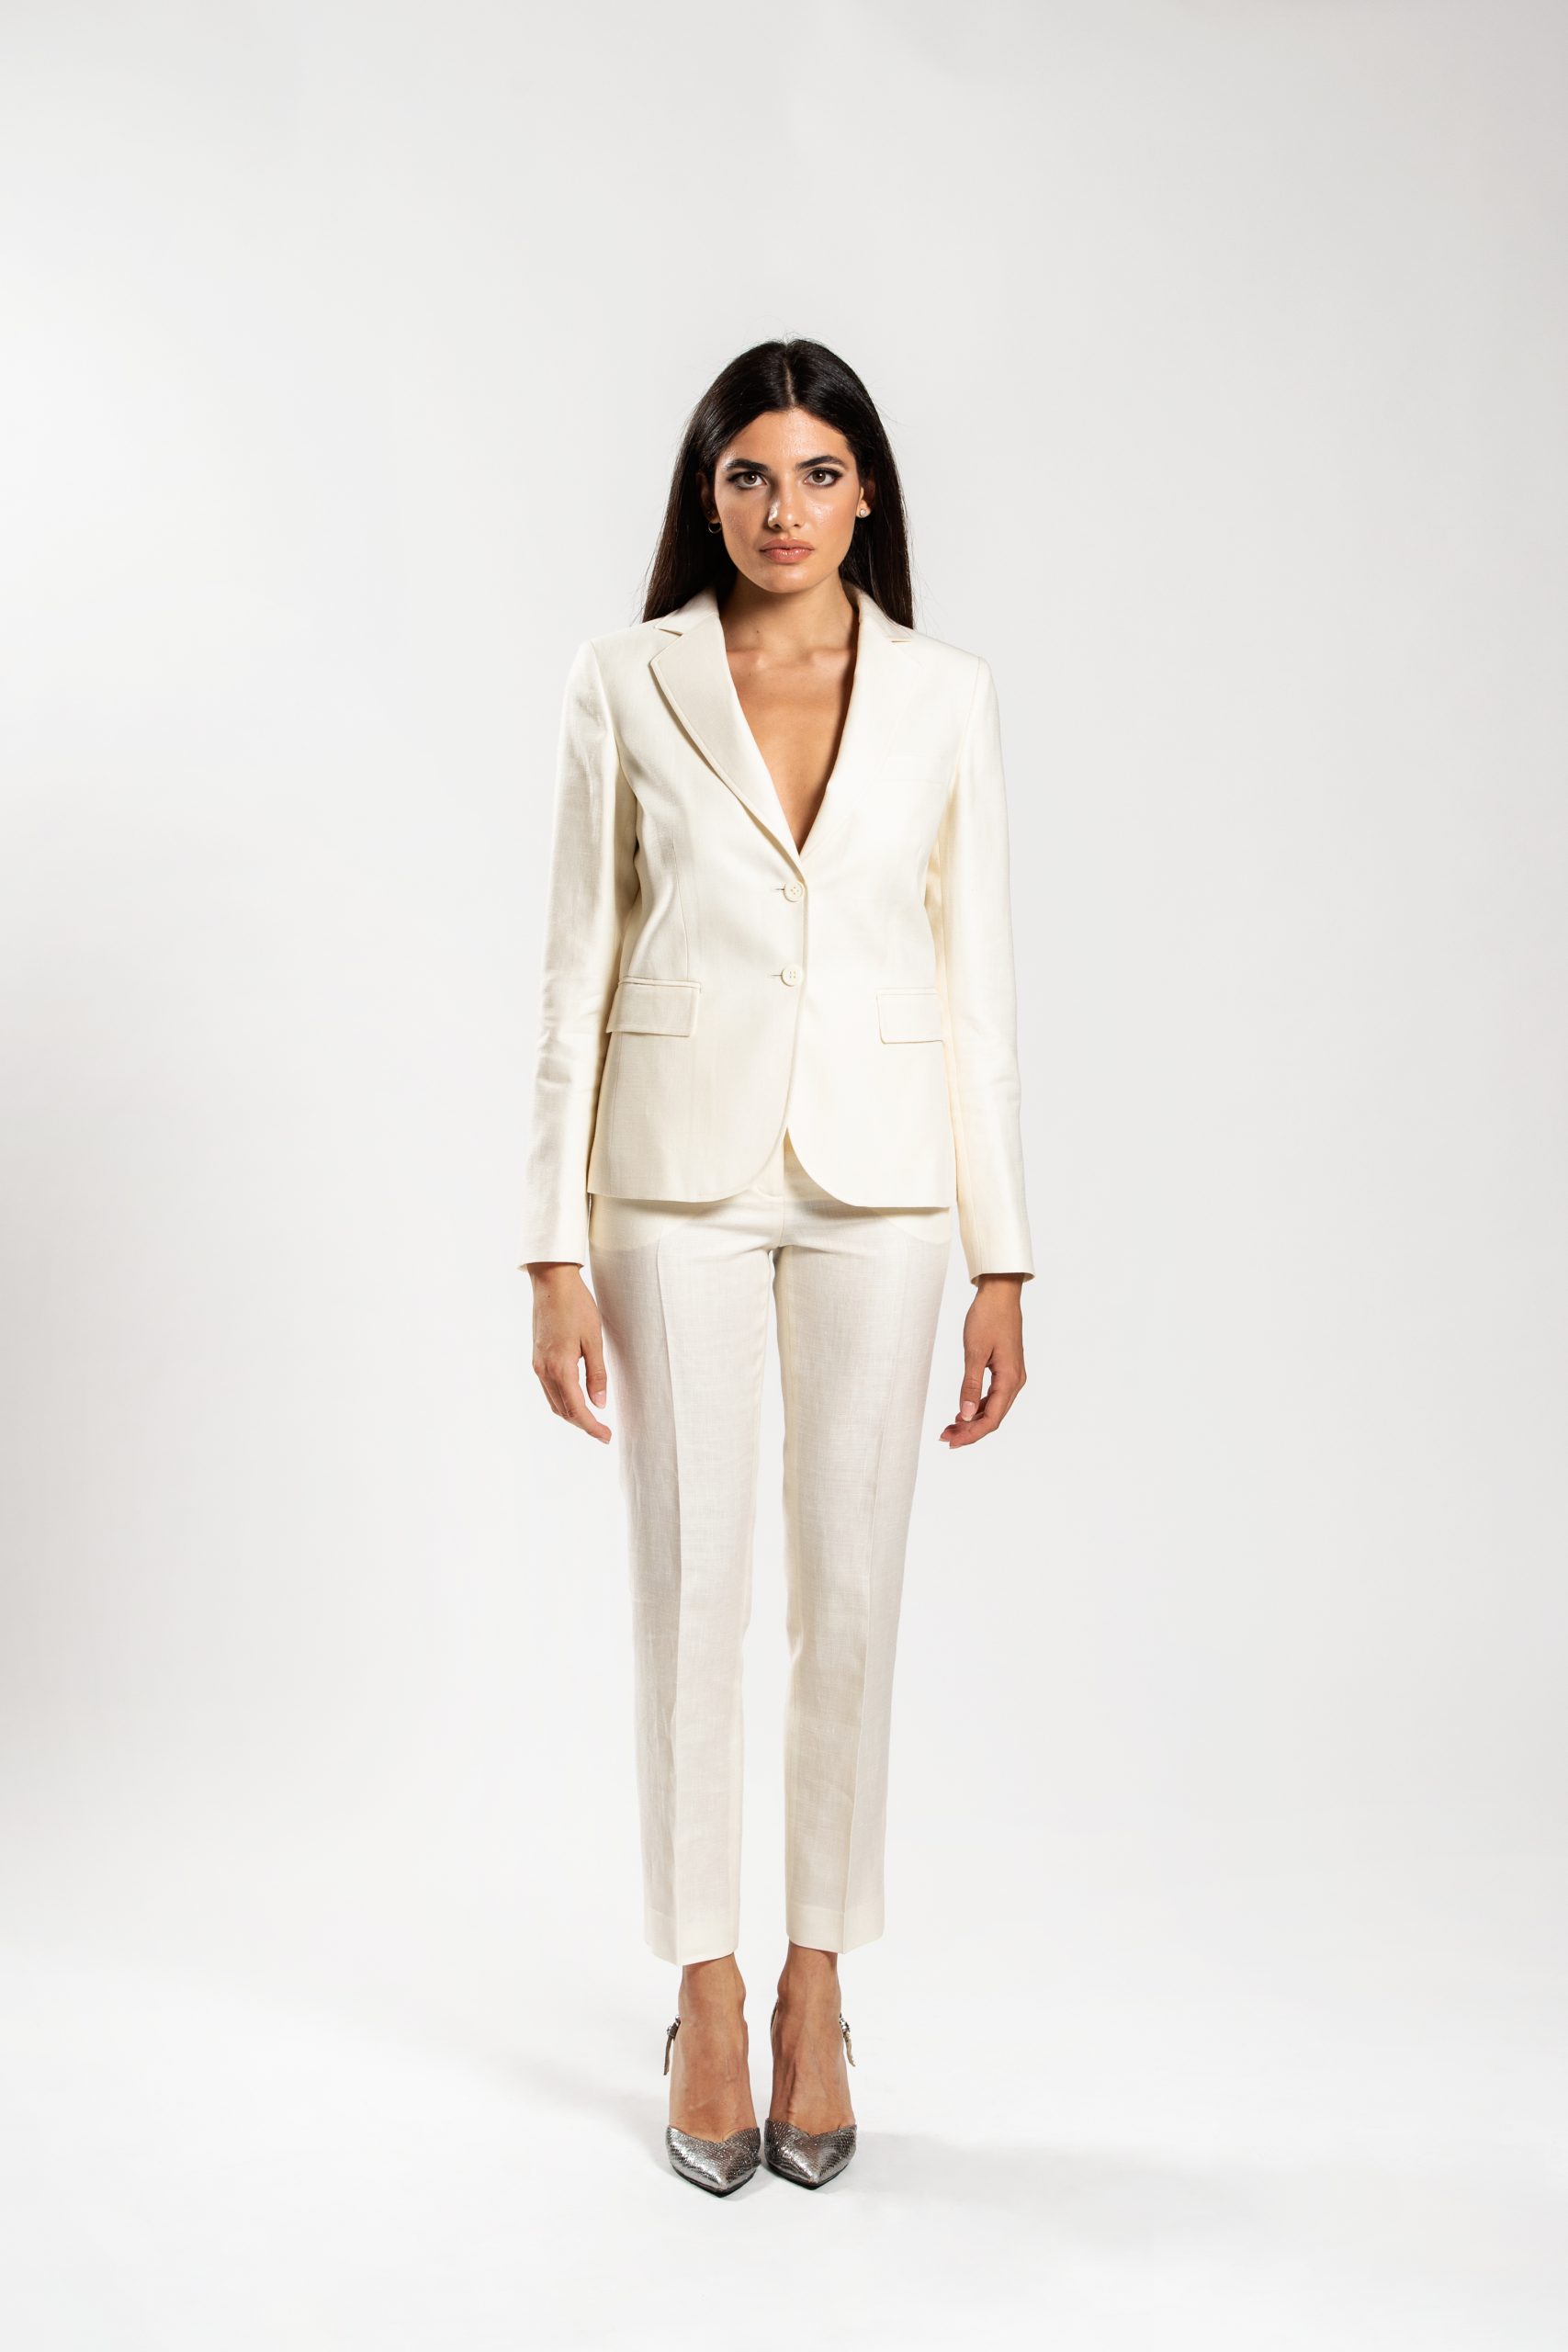 Women‘s suit in cream white linen blend | Creazioni Baleani